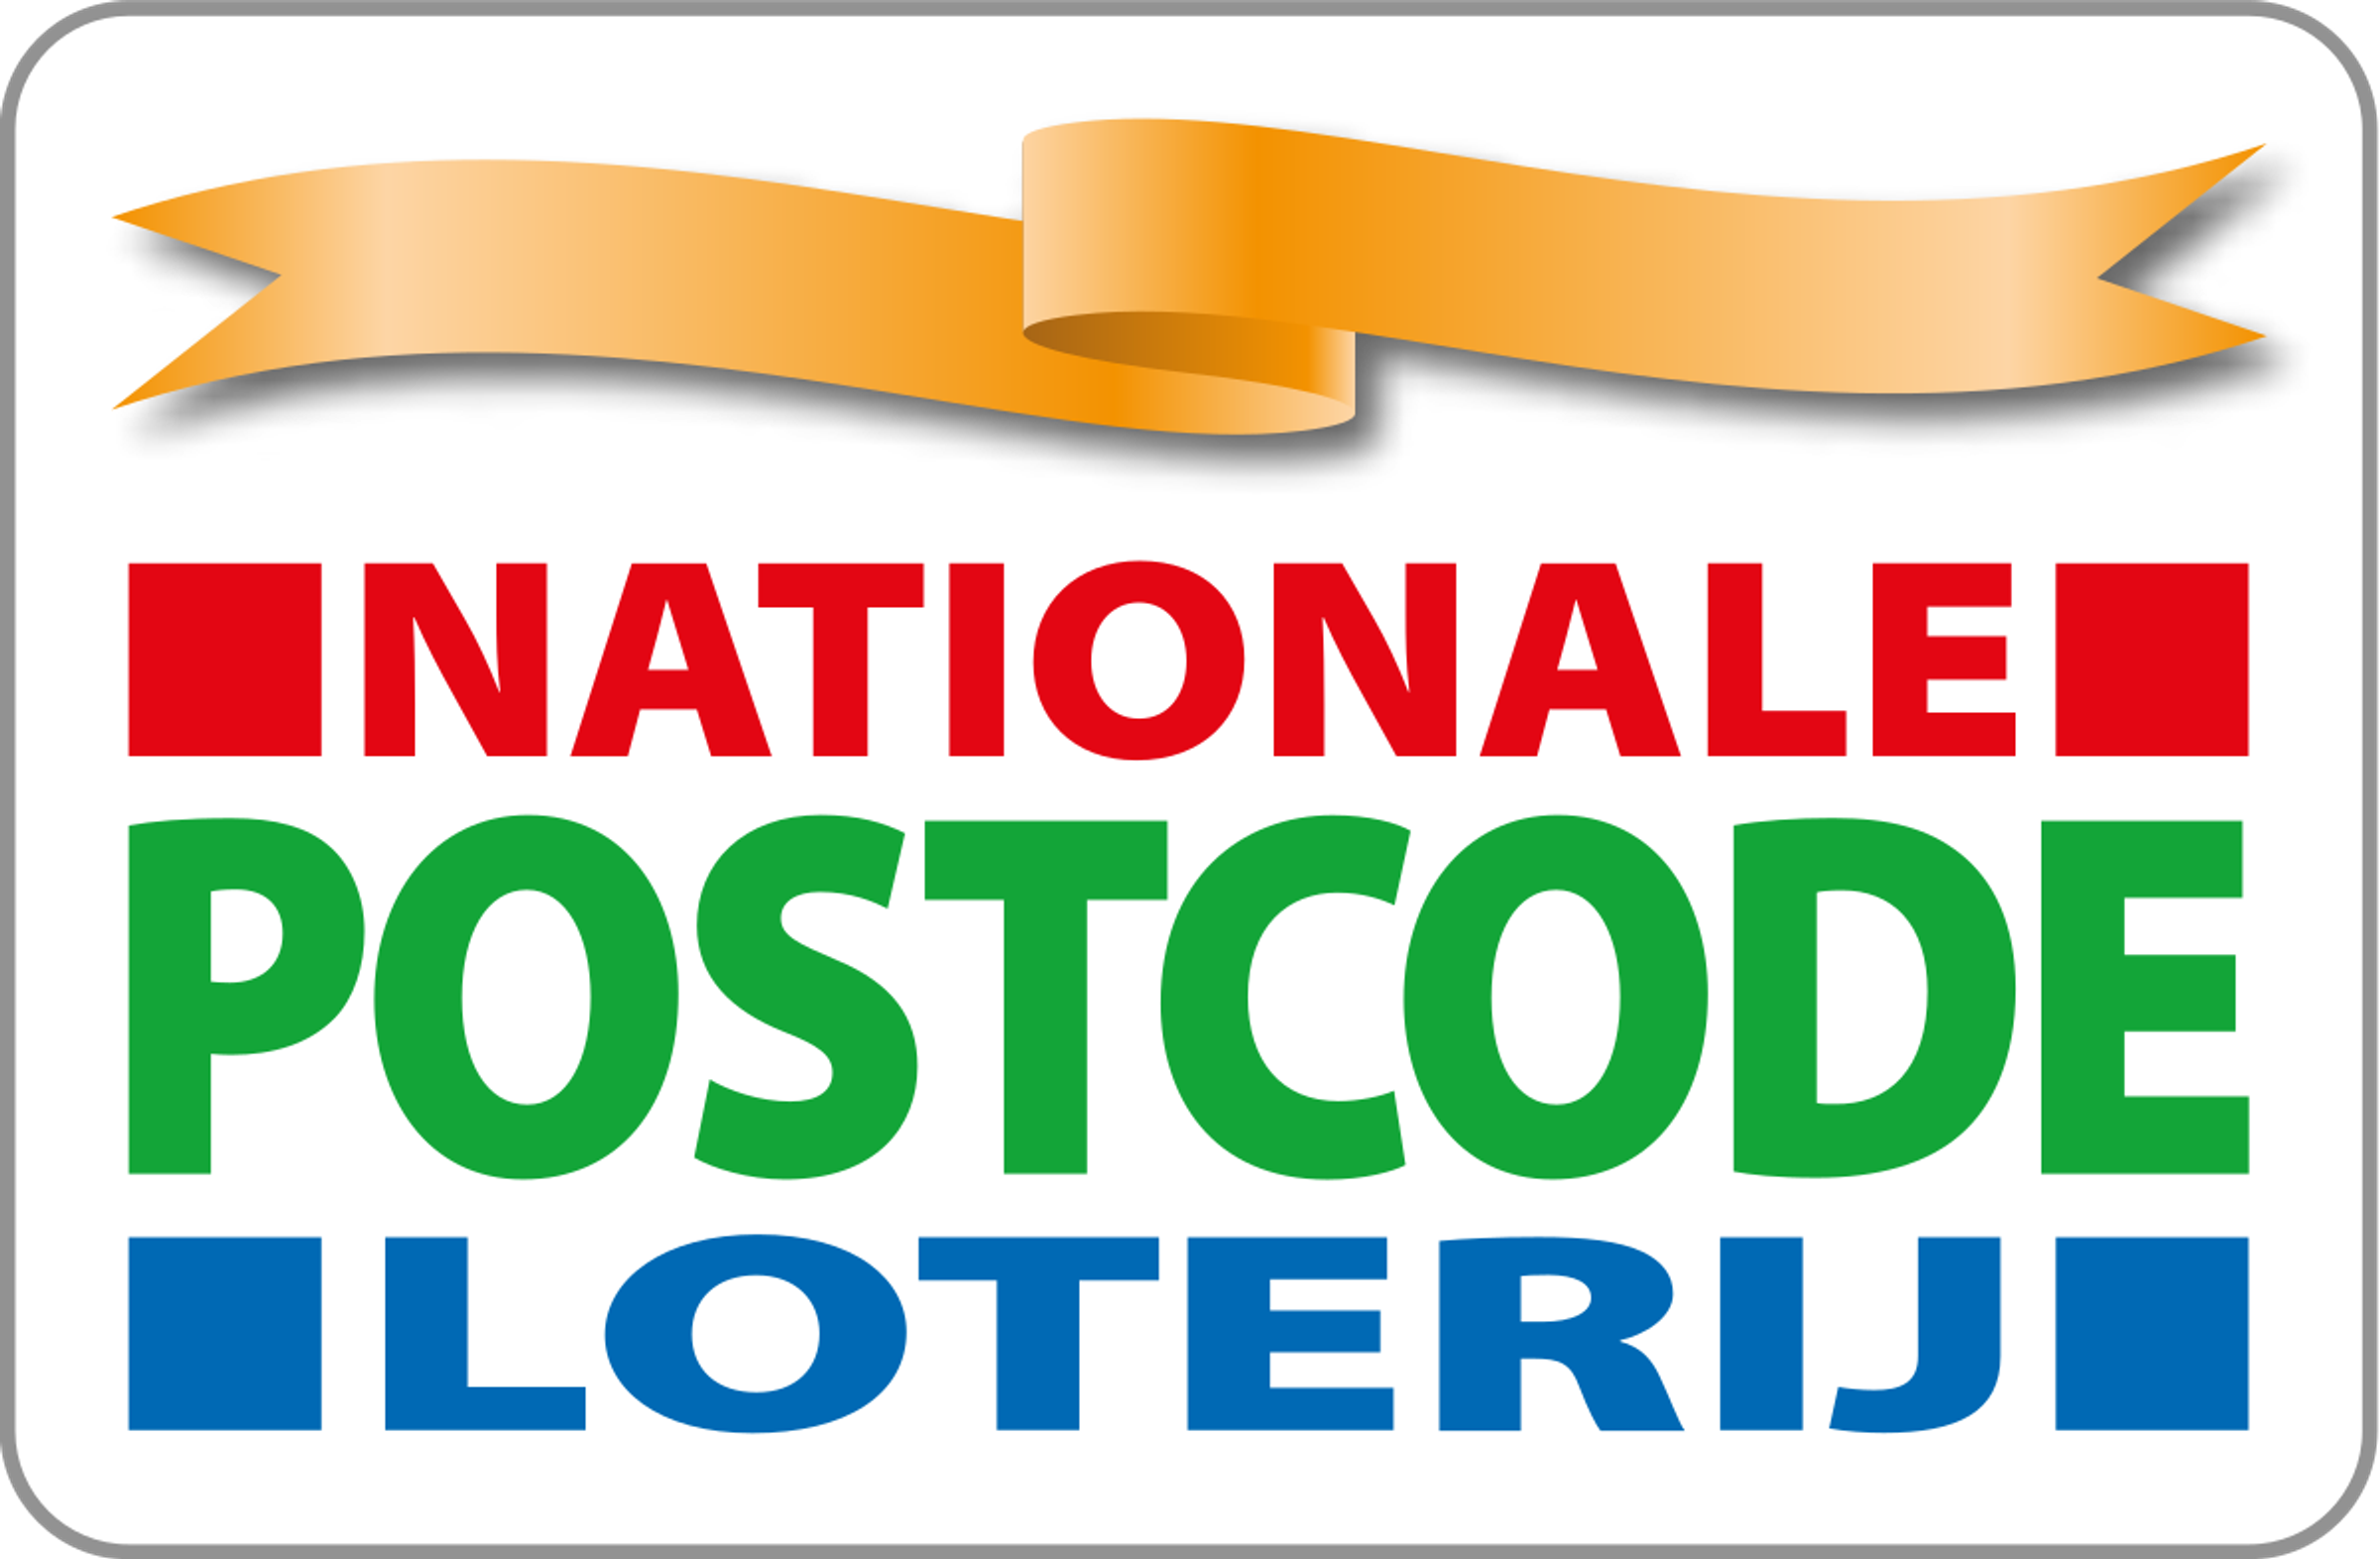 Dutch National Postcode Lottery